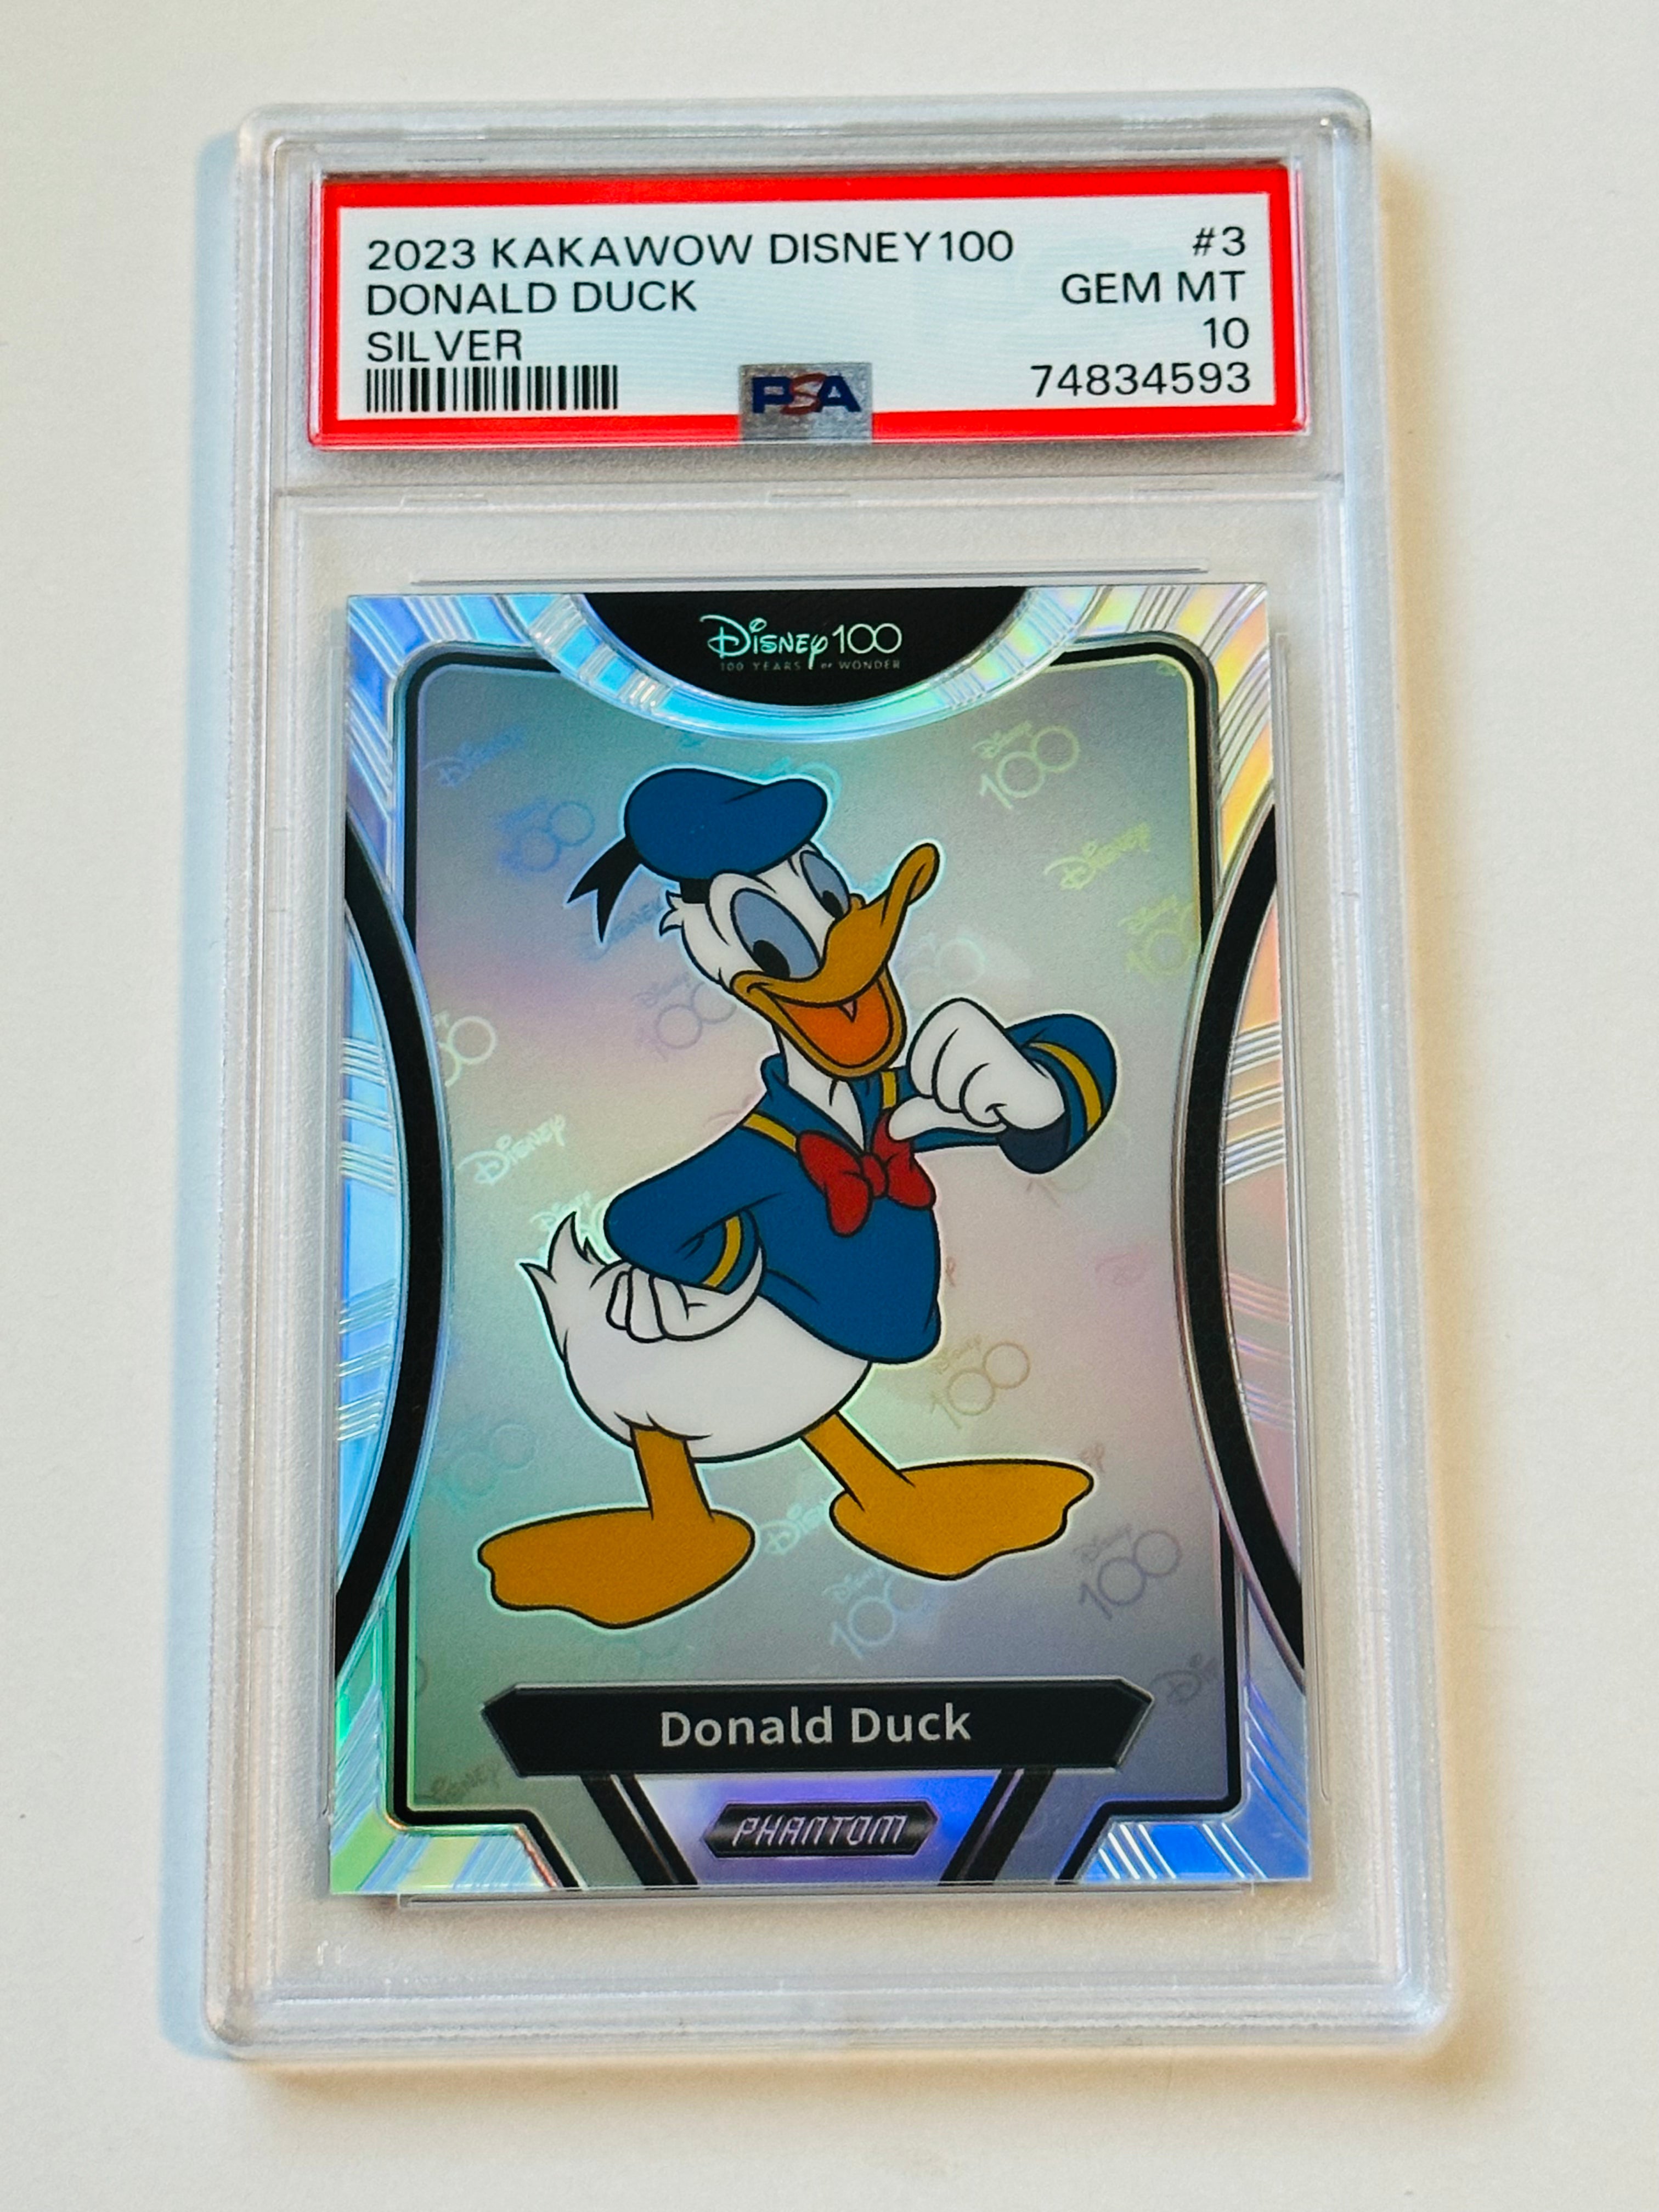 Disney 100 Kakawow Donald Duck silver PSA 10 high grade card